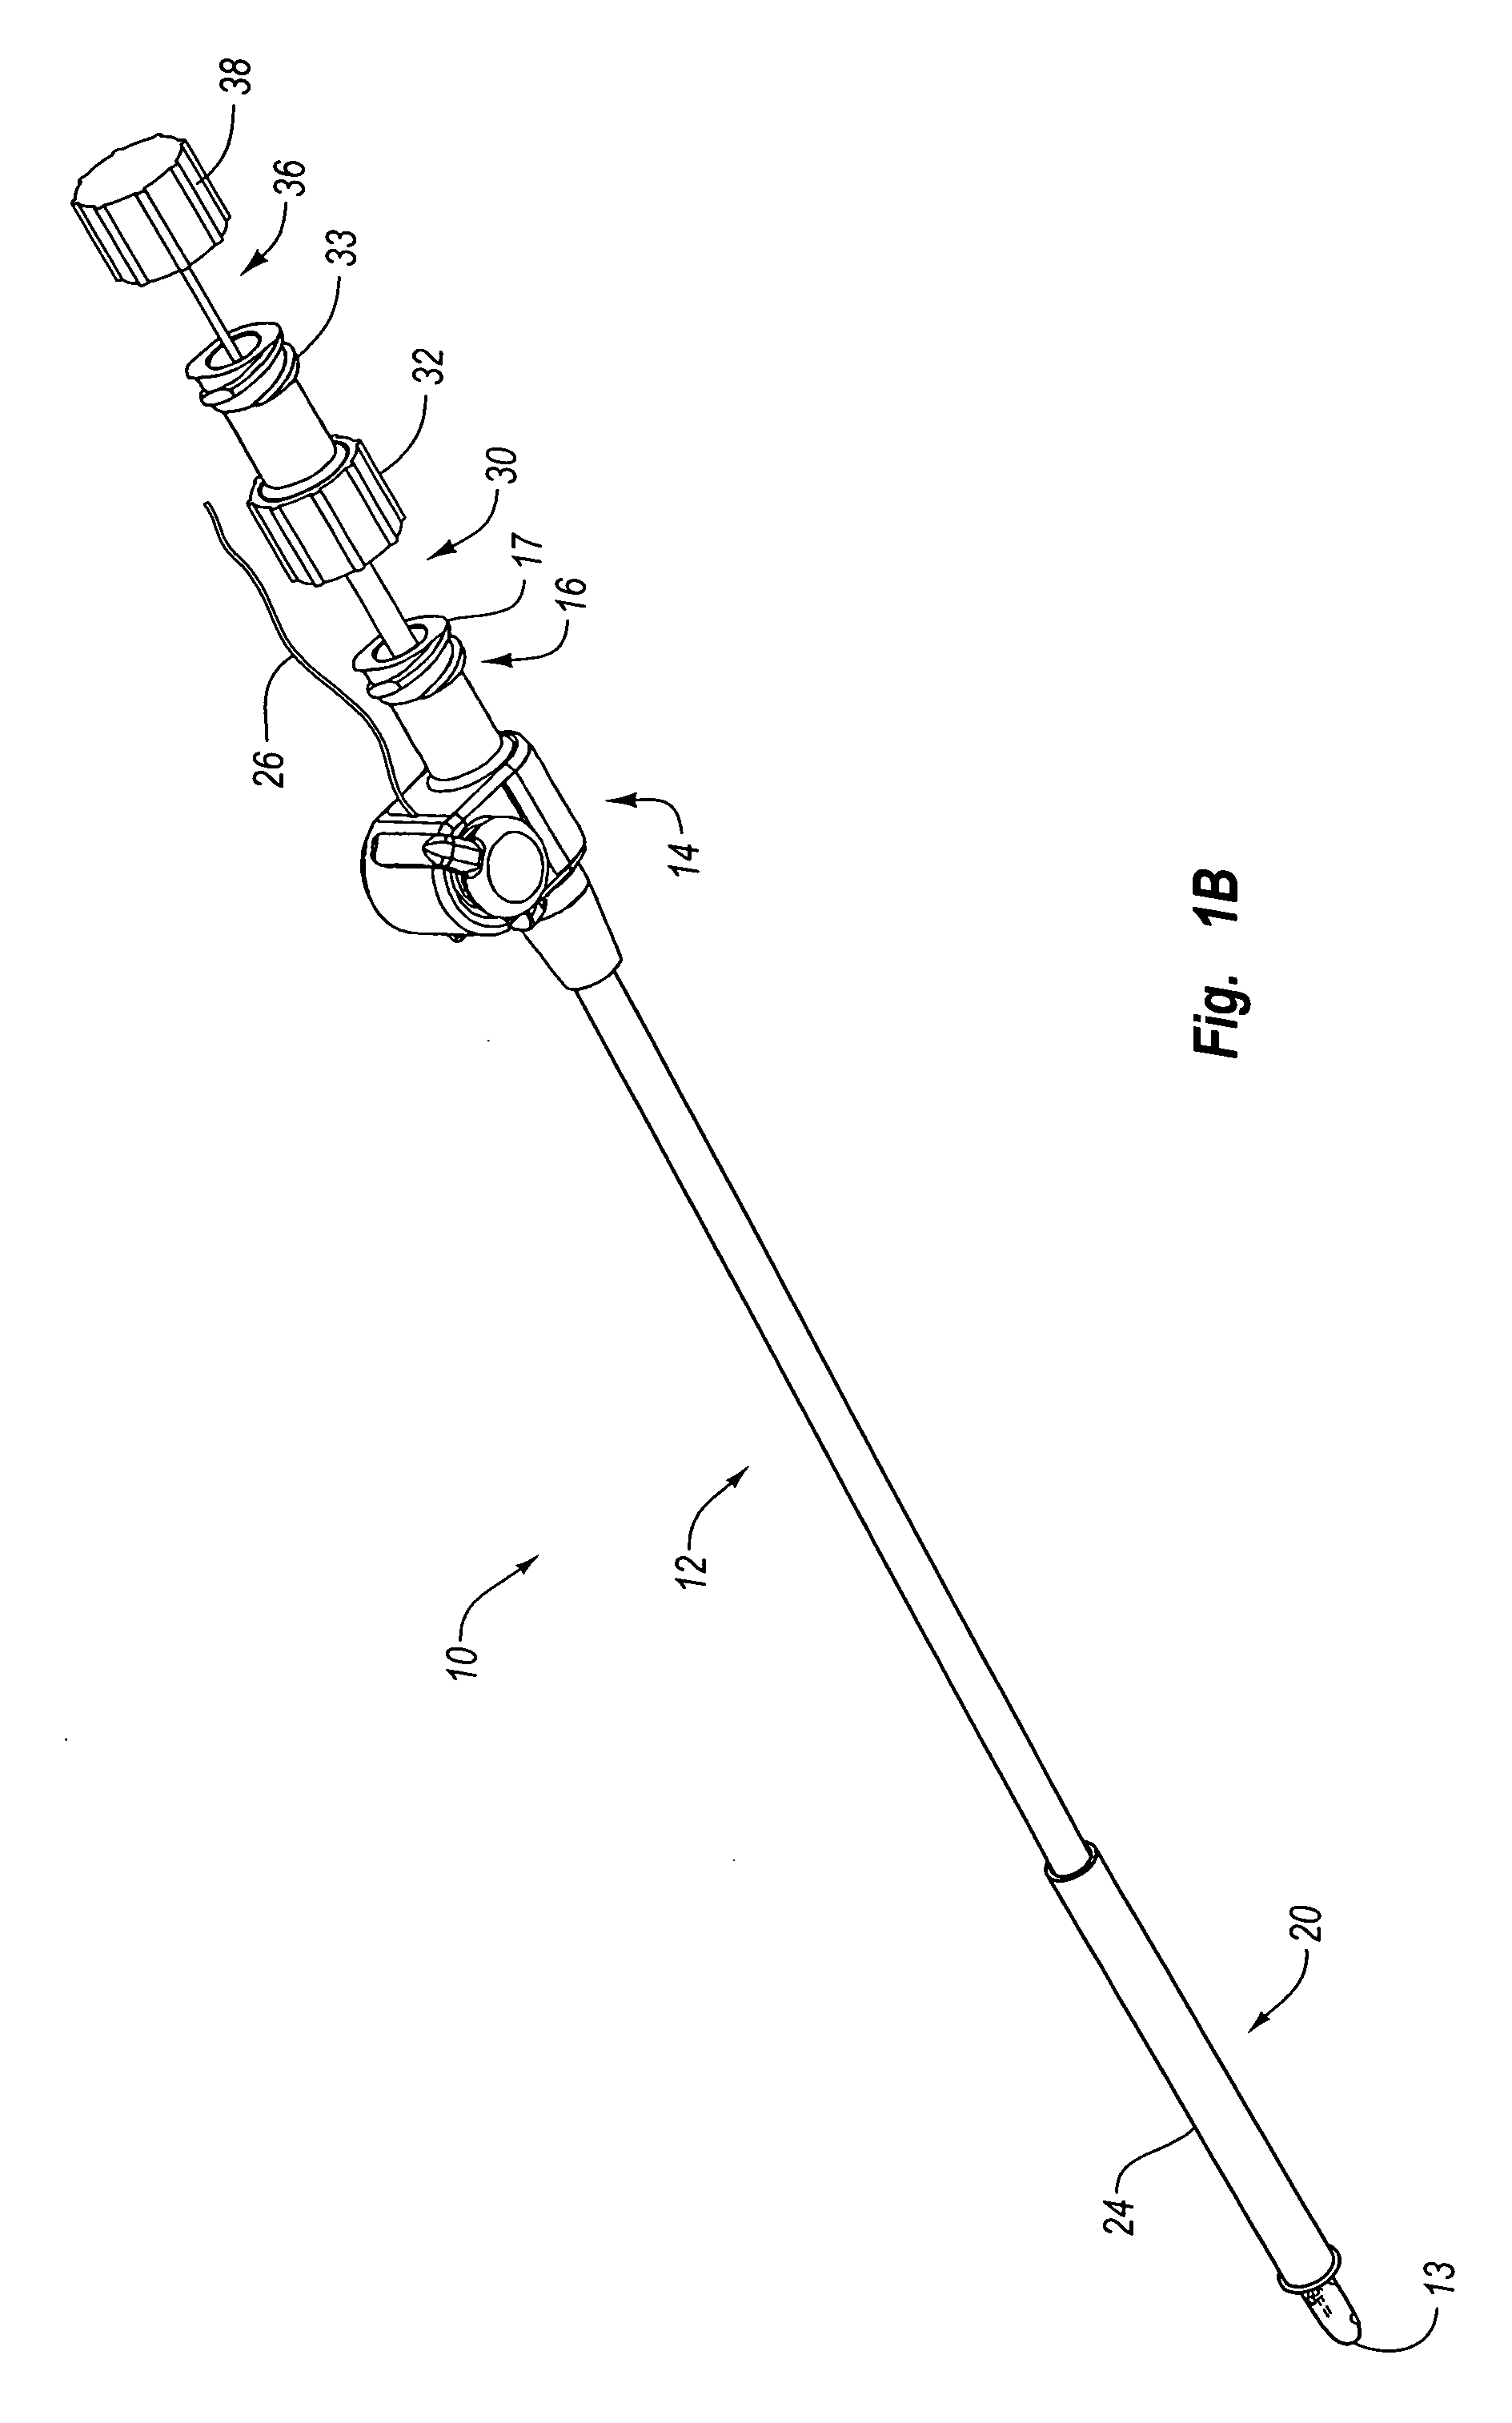 Drainage catheter with pig-tail straightener